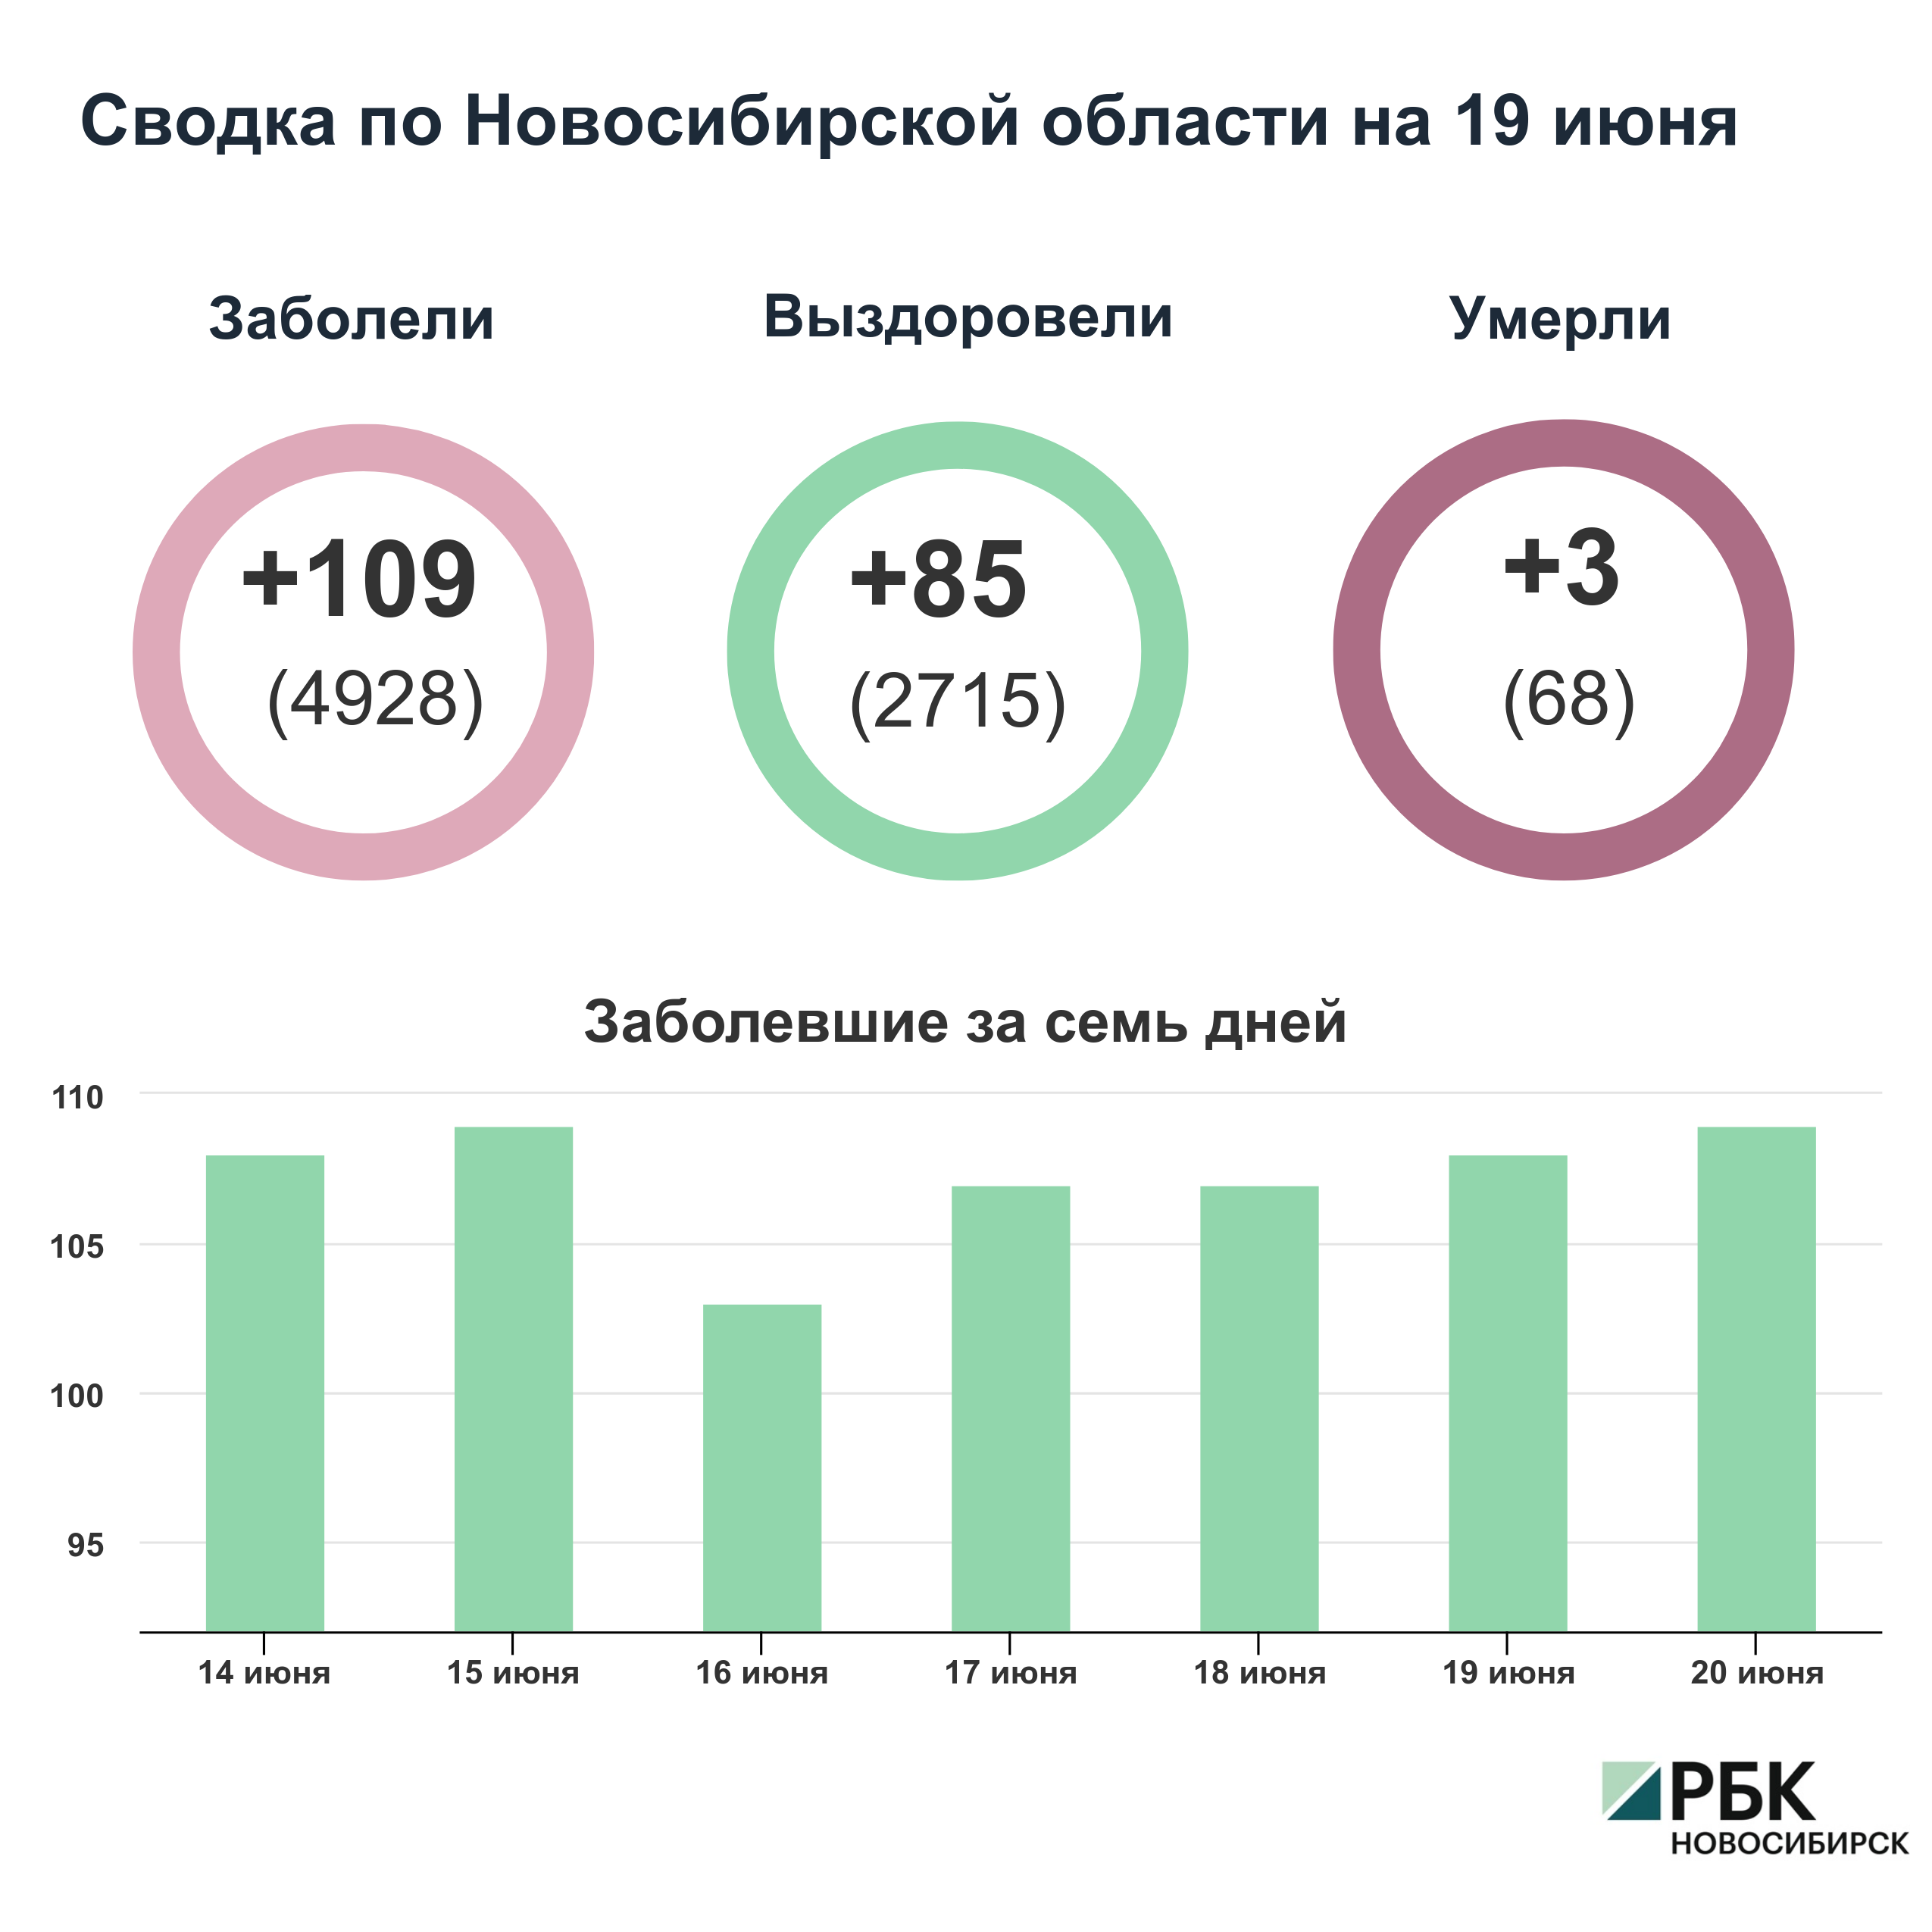 Коронавирус в Новосибирске: сводка на 20 июня